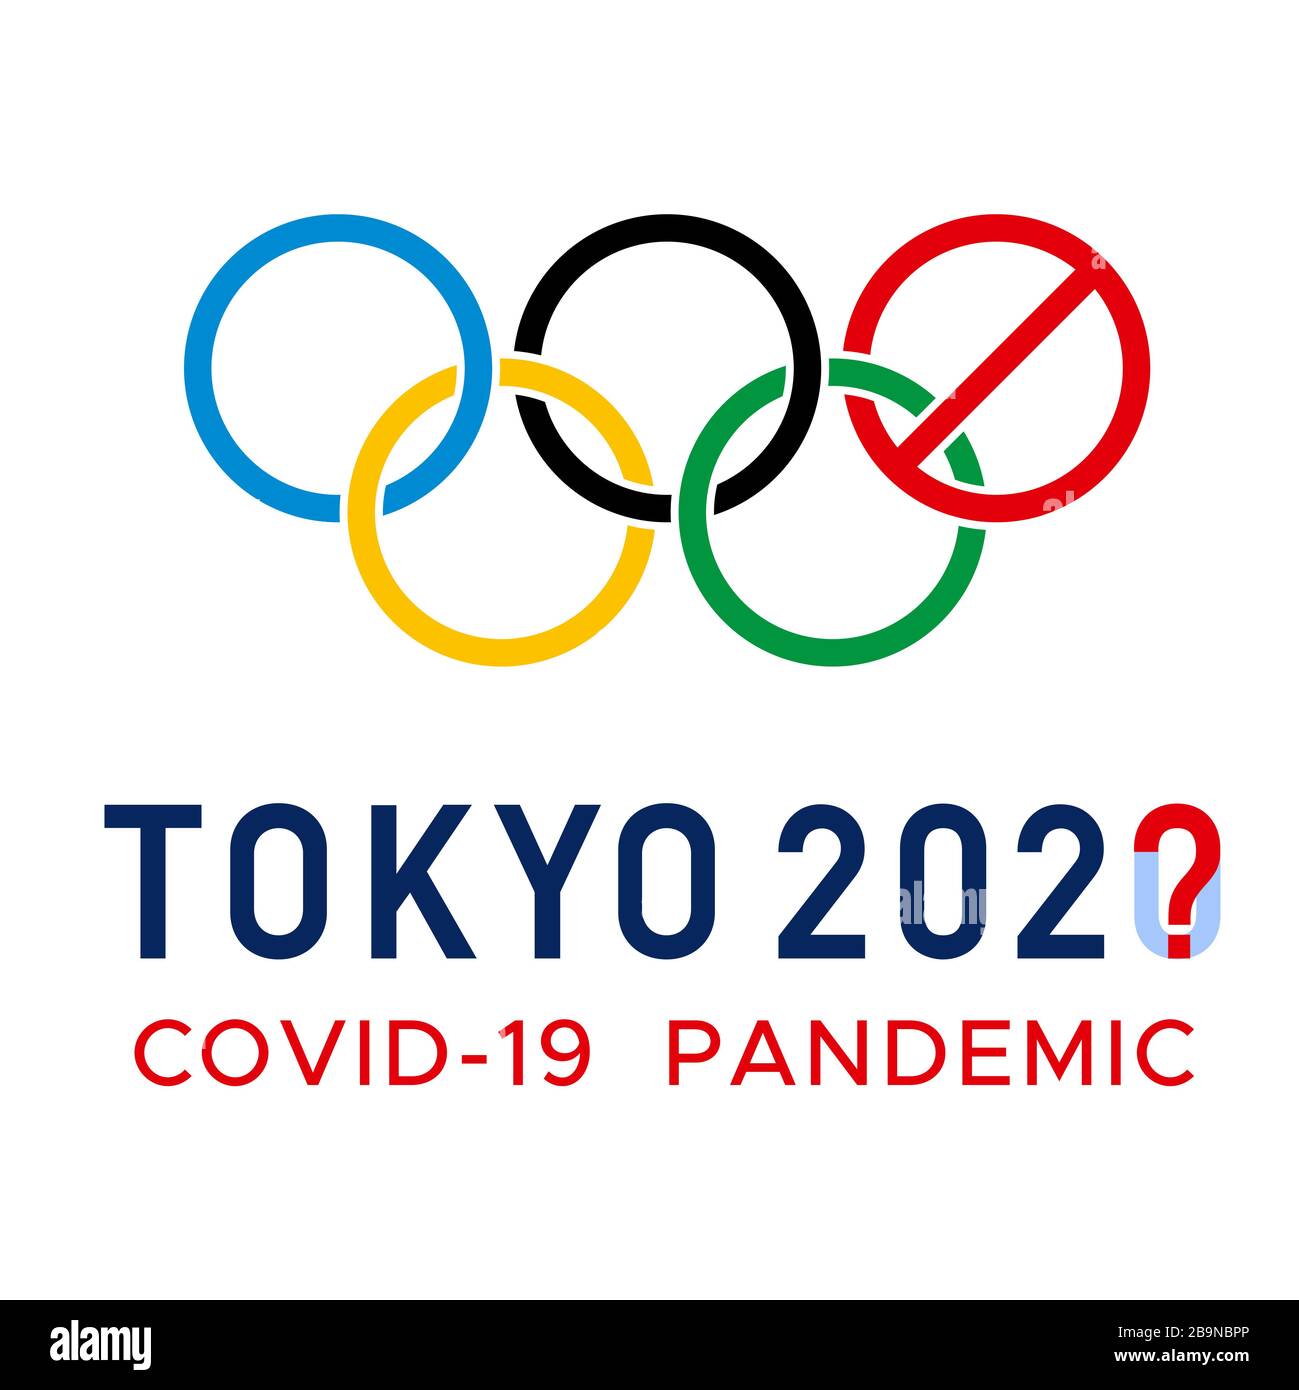 COVID-2019 in Tokyo 2020 Olympics logo. Cancelled Stock Photo